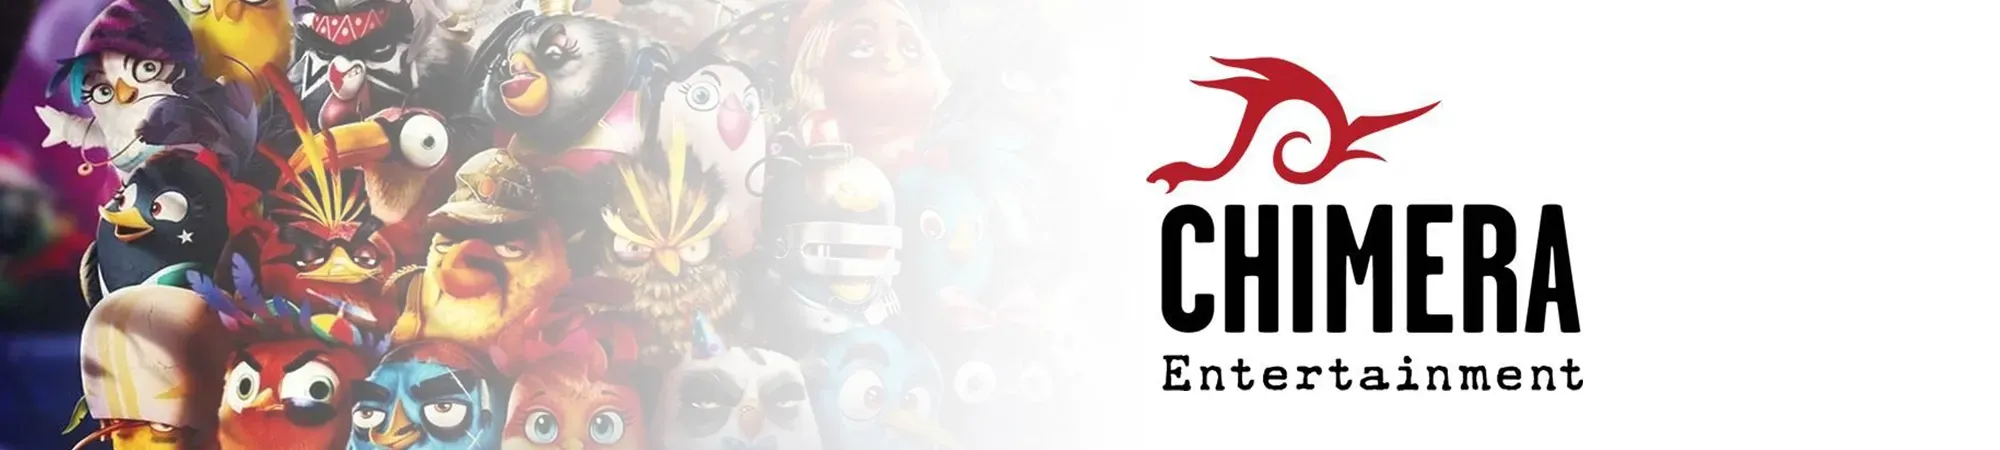 Chimera Entertainment Banner